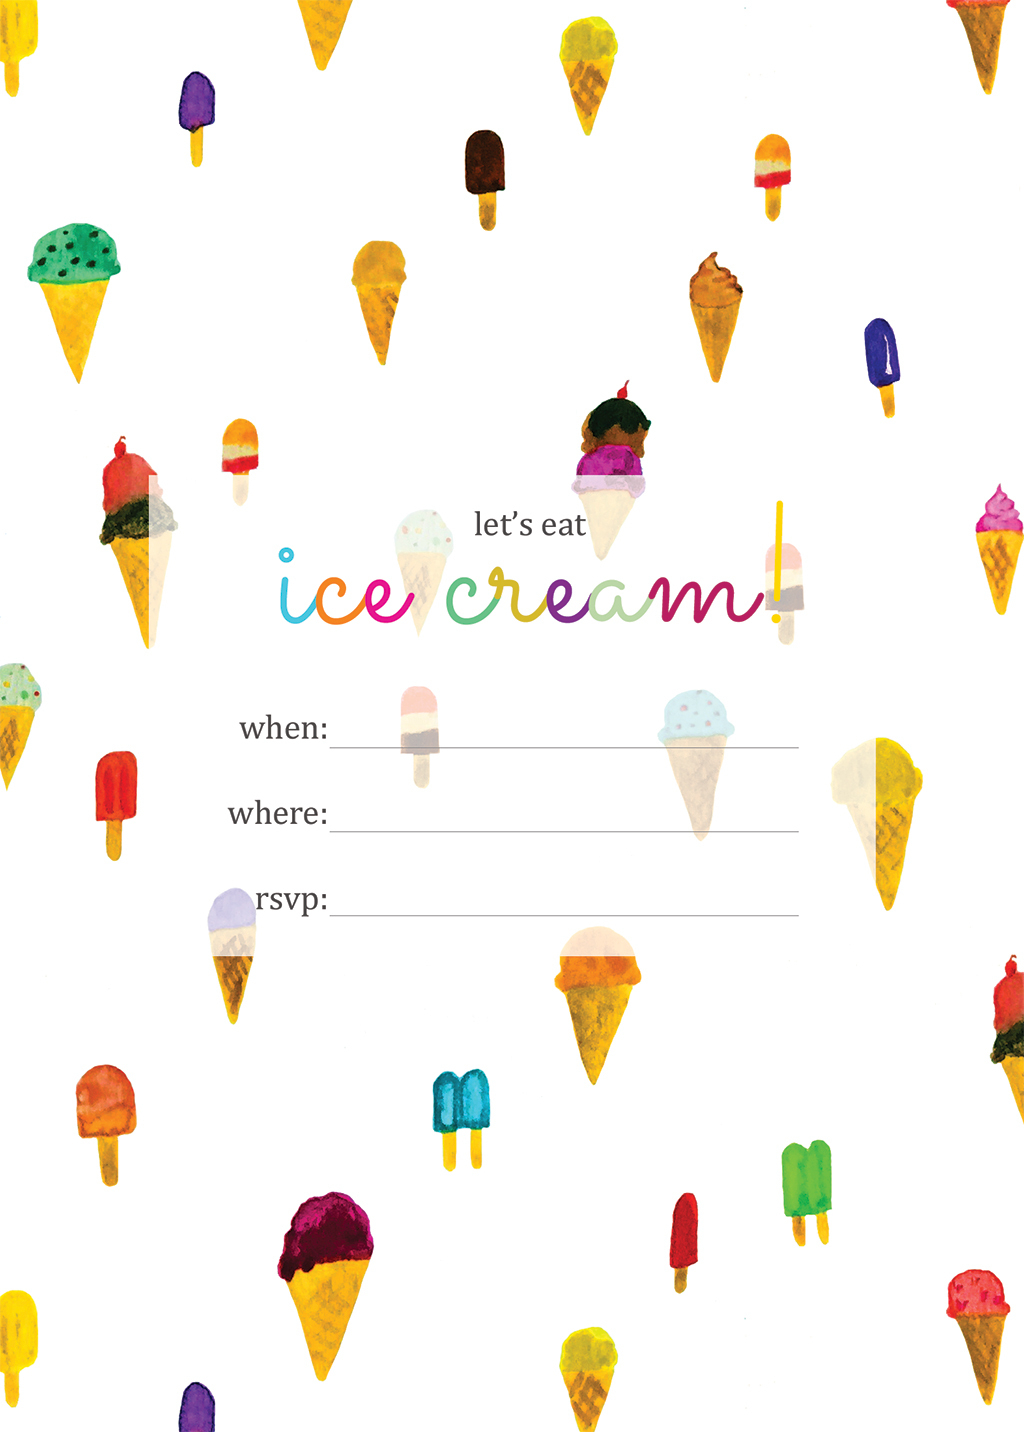 Print | Printable Ice Cream Party Invitation - Squirrelly Minds - Ice Cream Party Invitations Printable Free